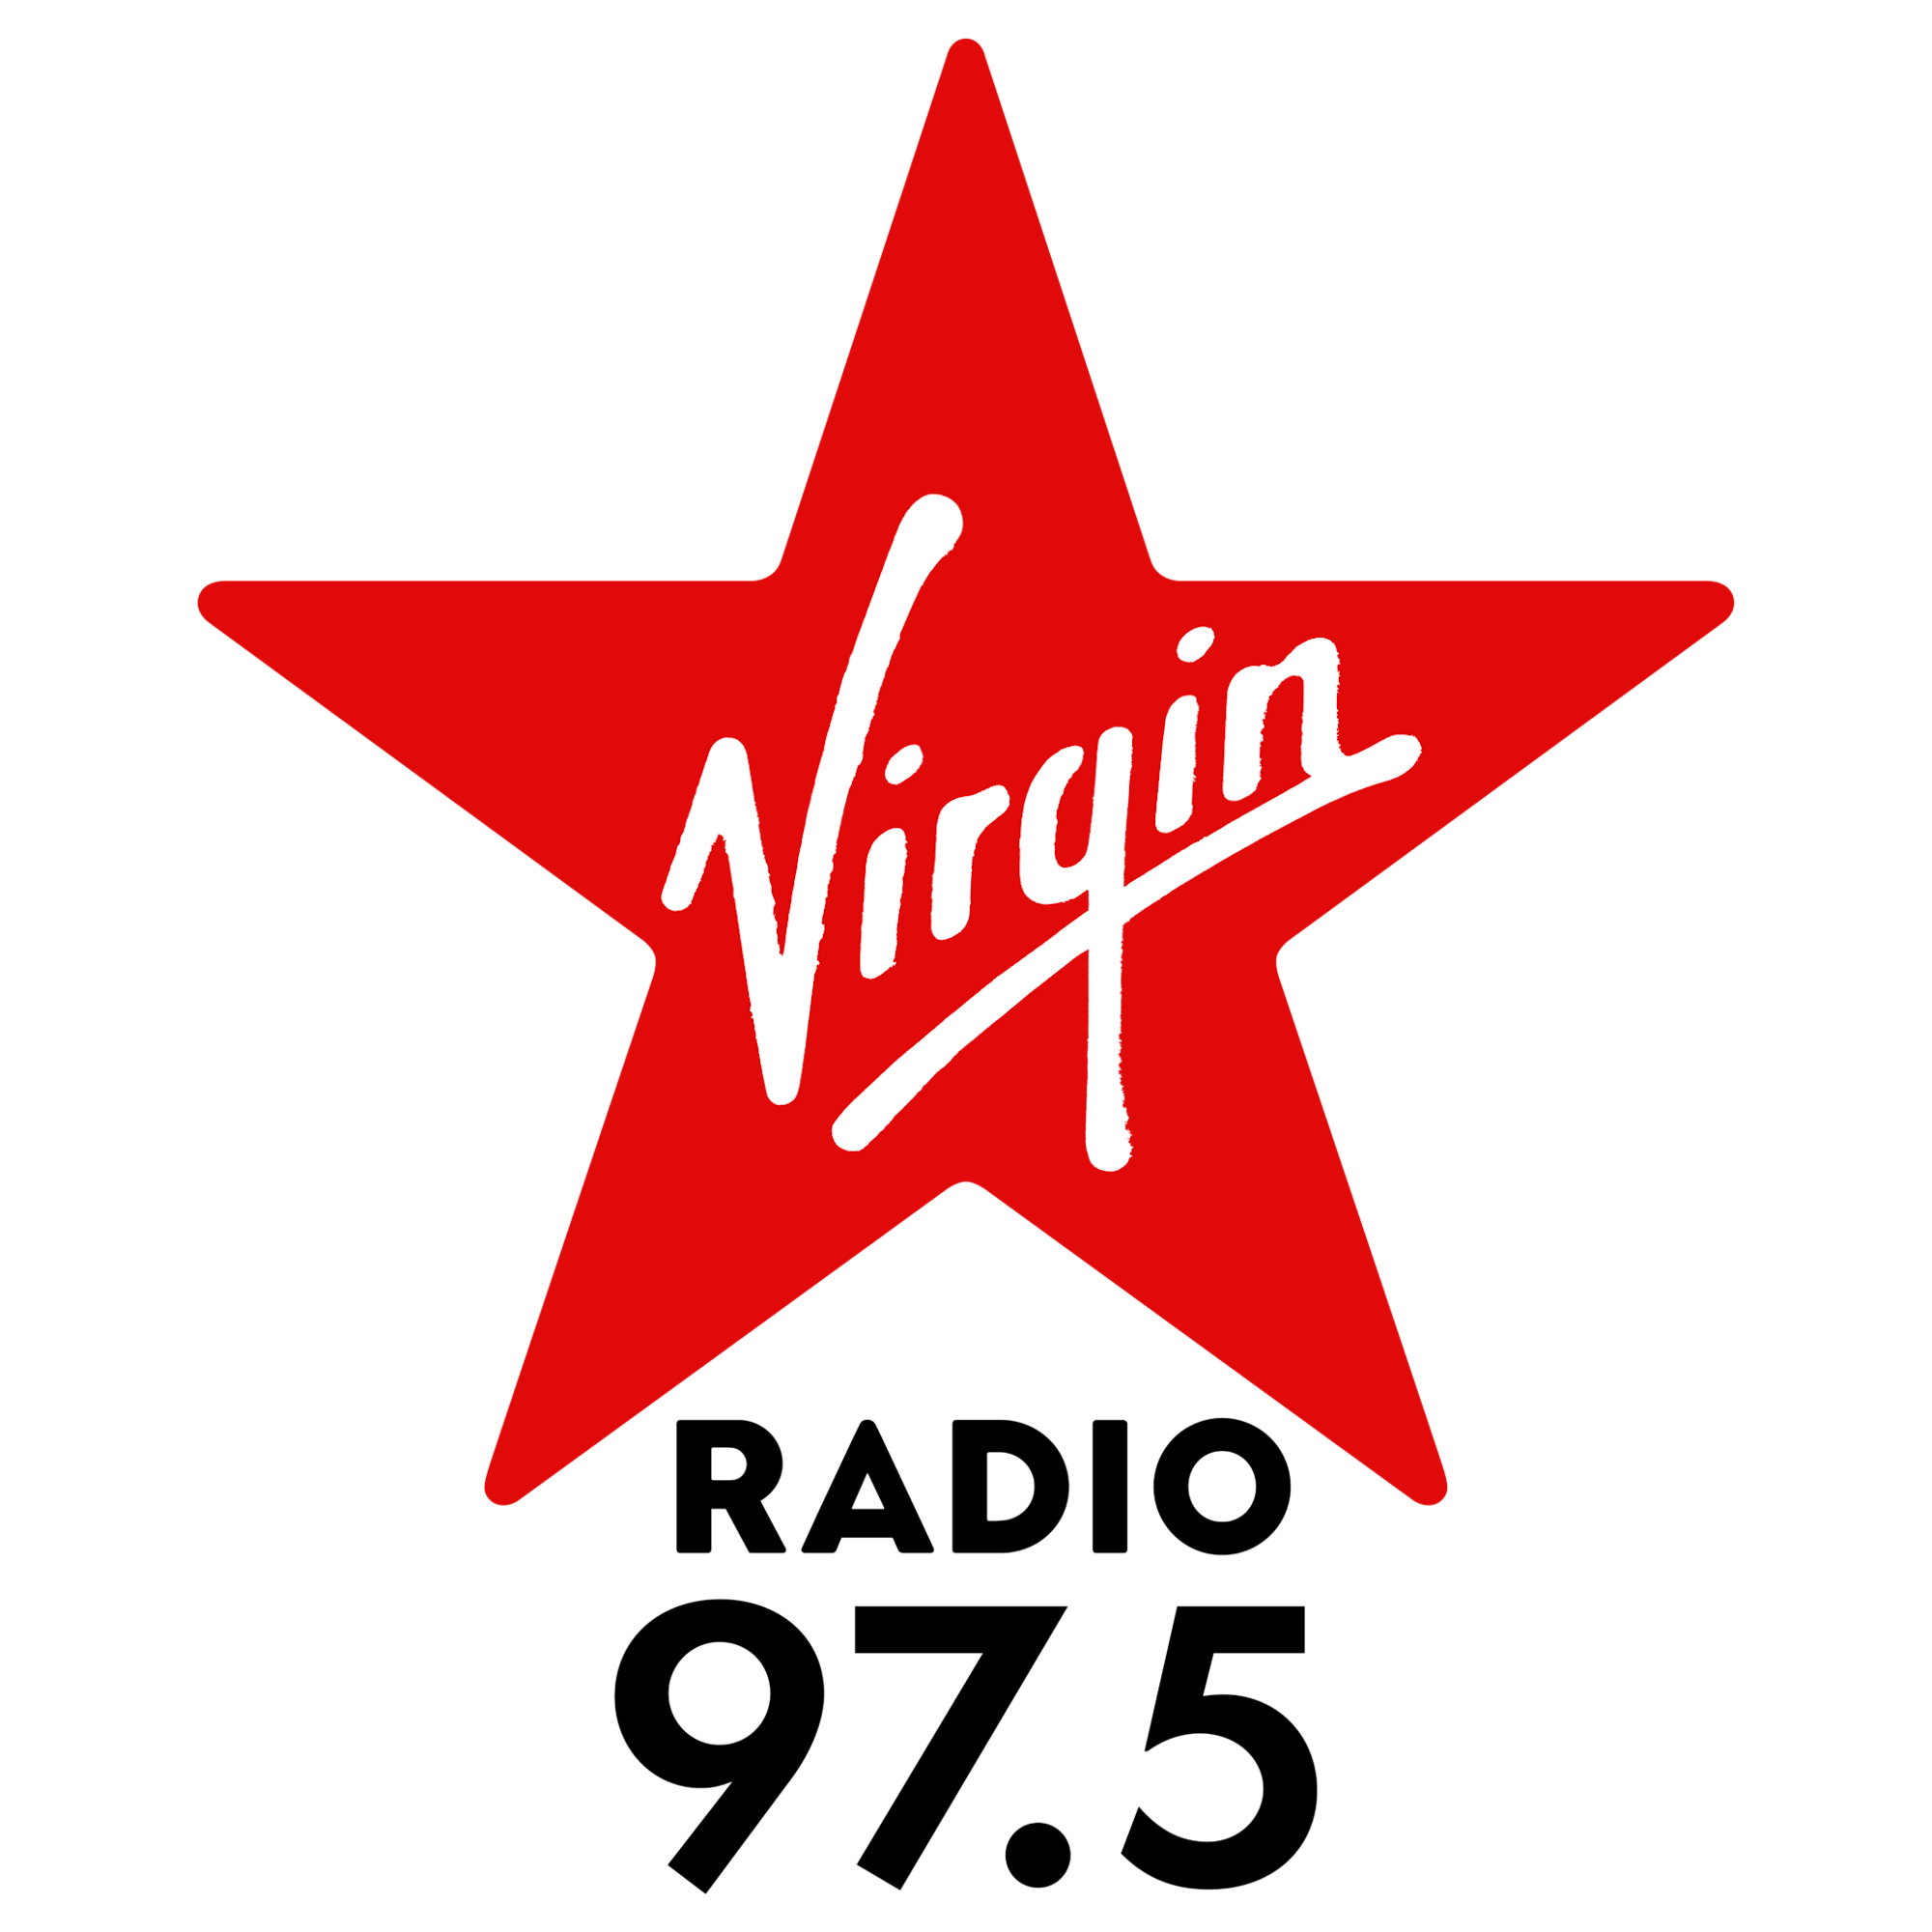 Virgin Radio 97.5 logo